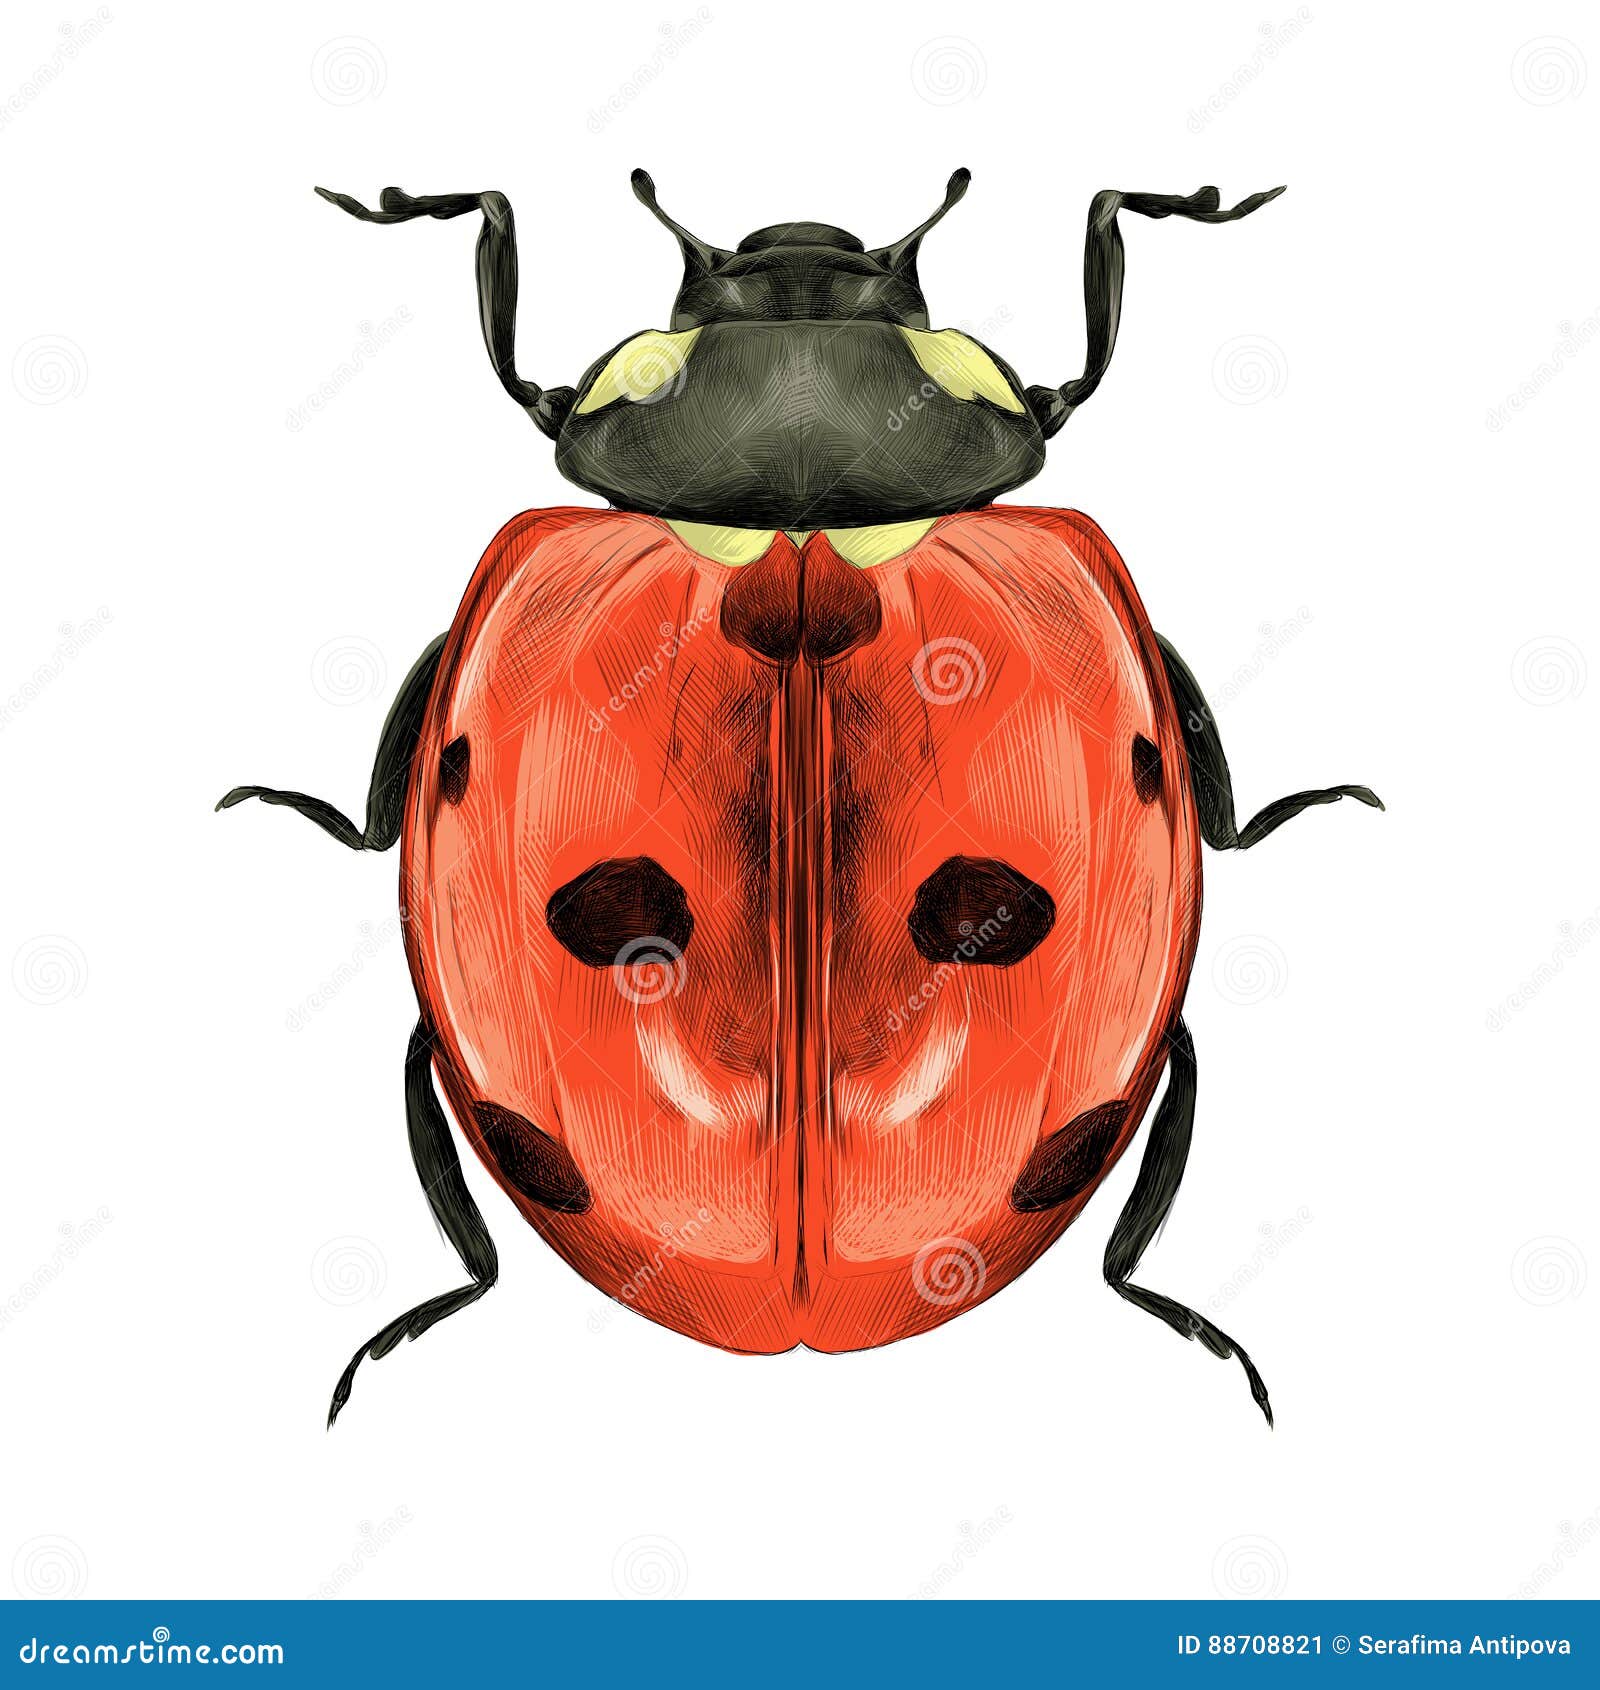 How to Draw a Ladybug II Insect drawings II #artjanag - YouTube